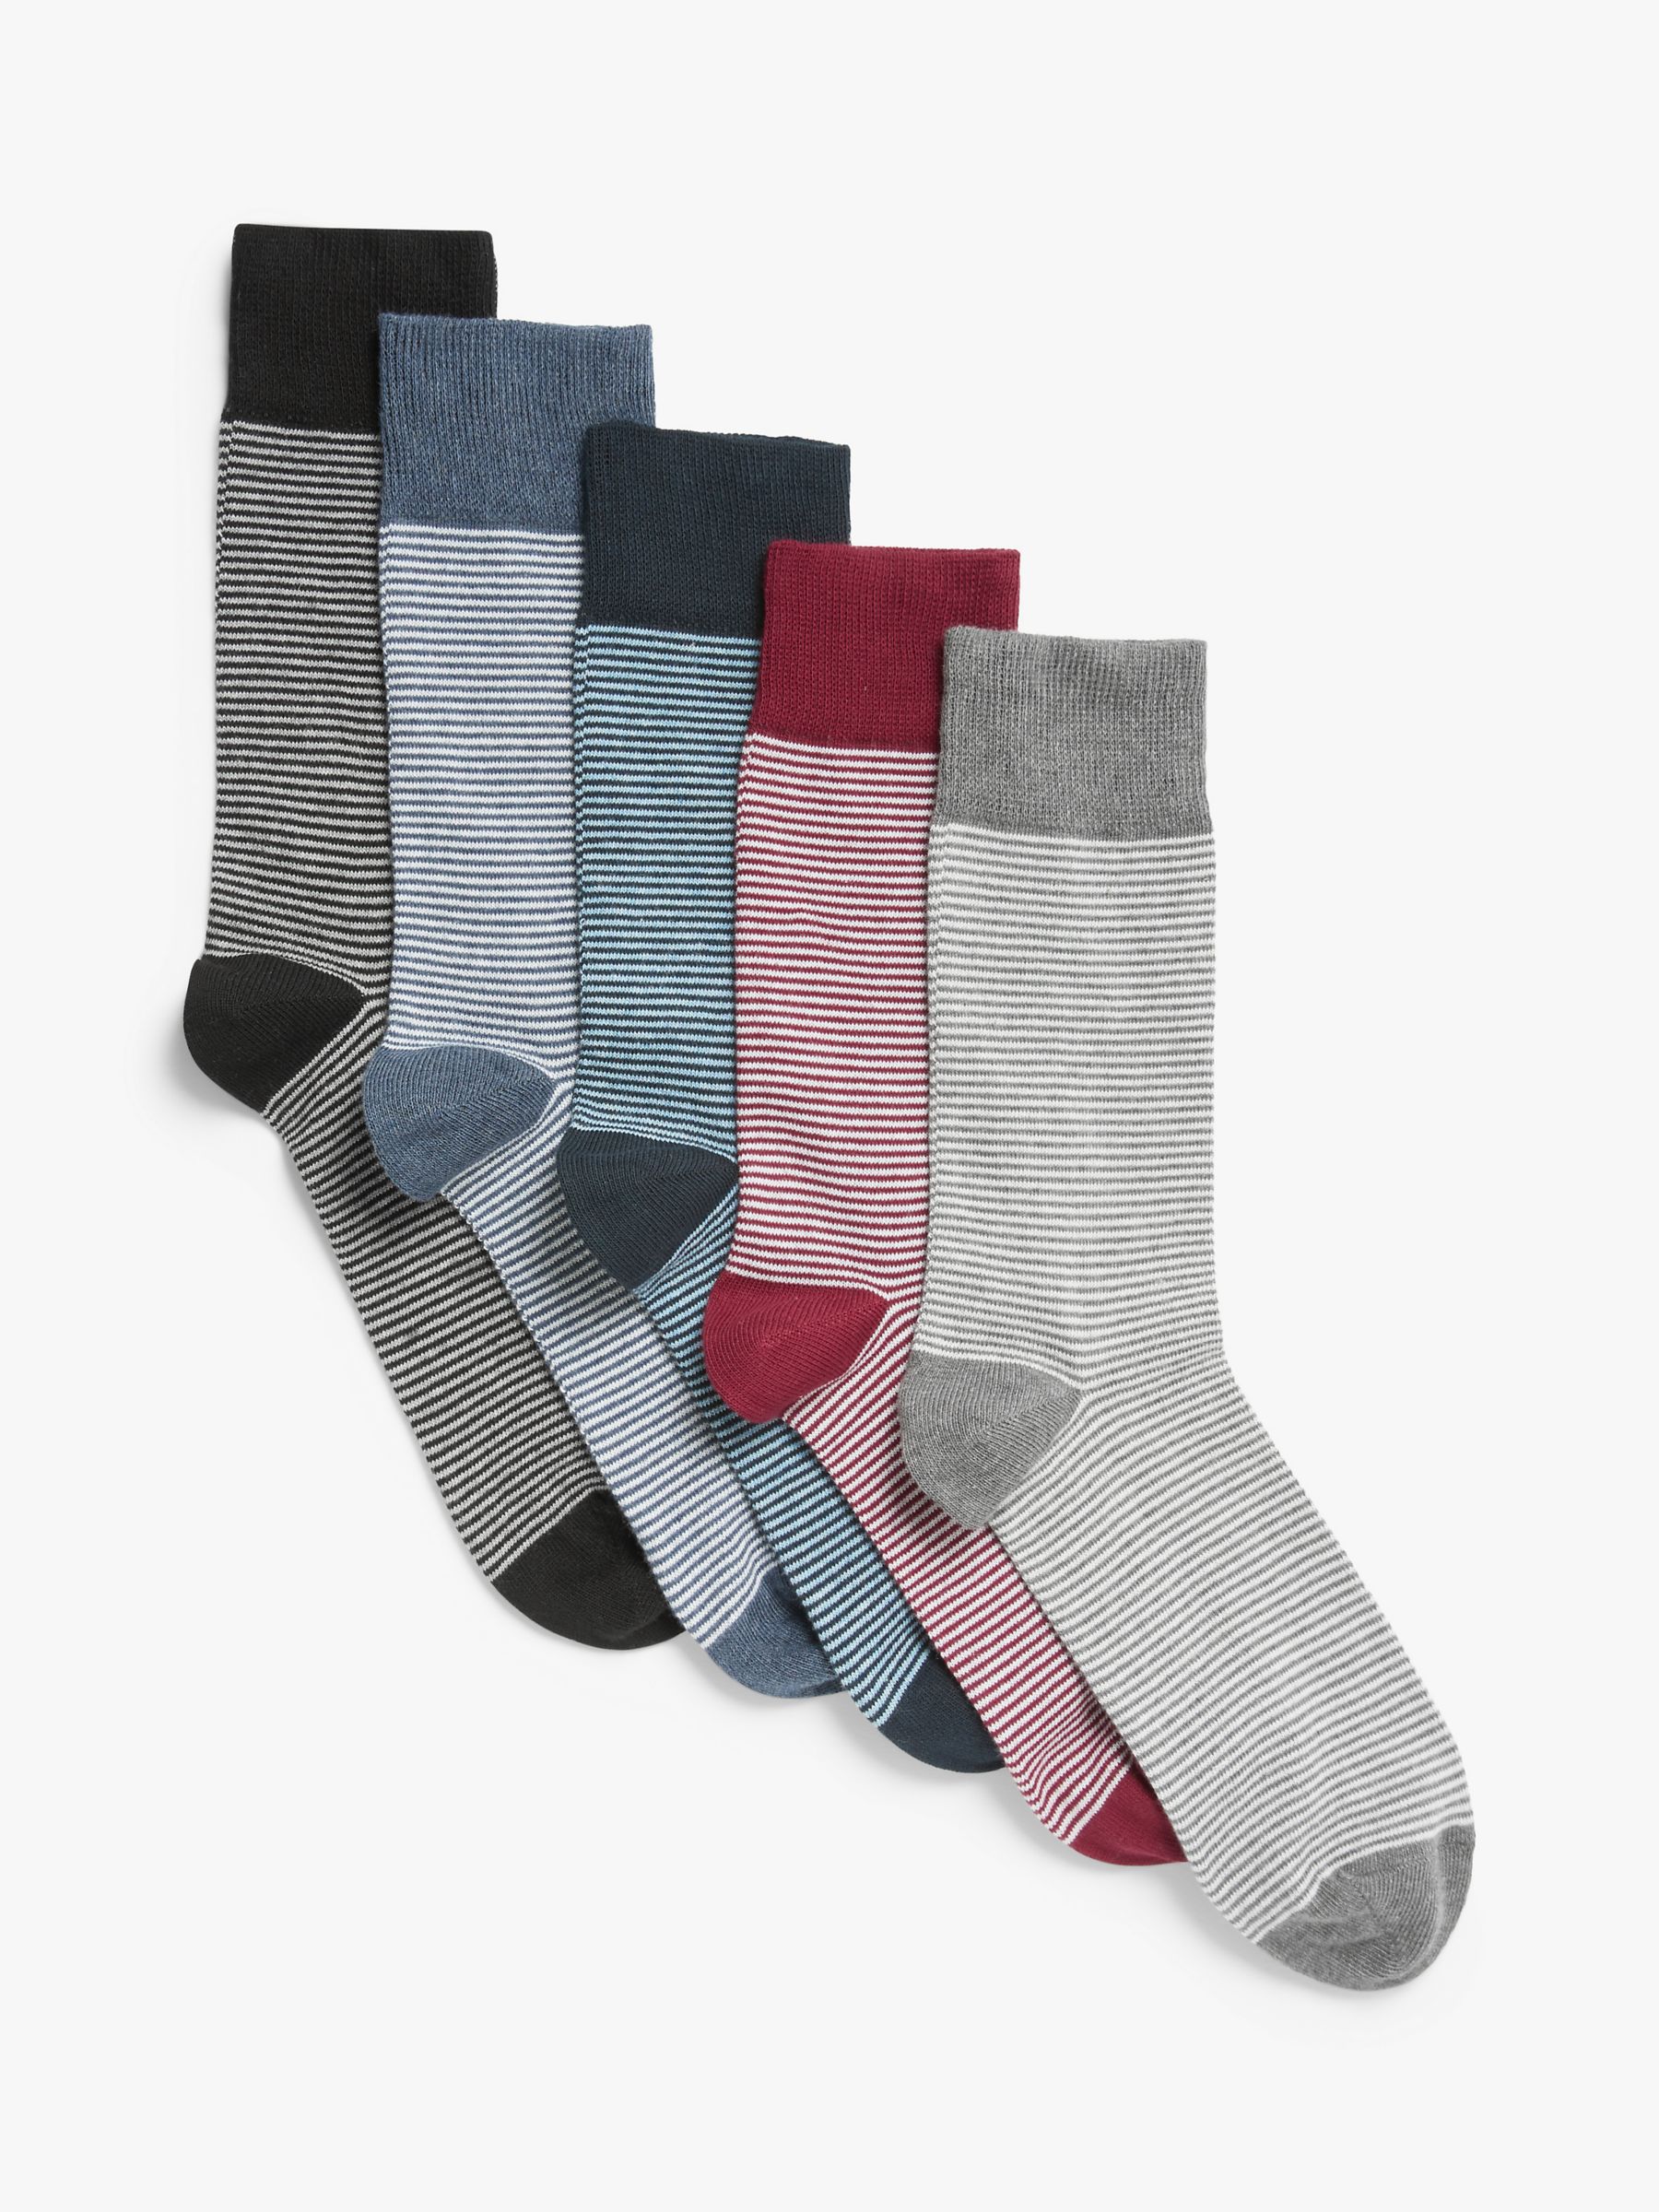 Buy John Lewis Organic Cotton Rich Feeder Stripe Men's Socks, Pack of 5, Black/Blue/Dark Blue/Burgundy/Grey Online at johnlewis.com